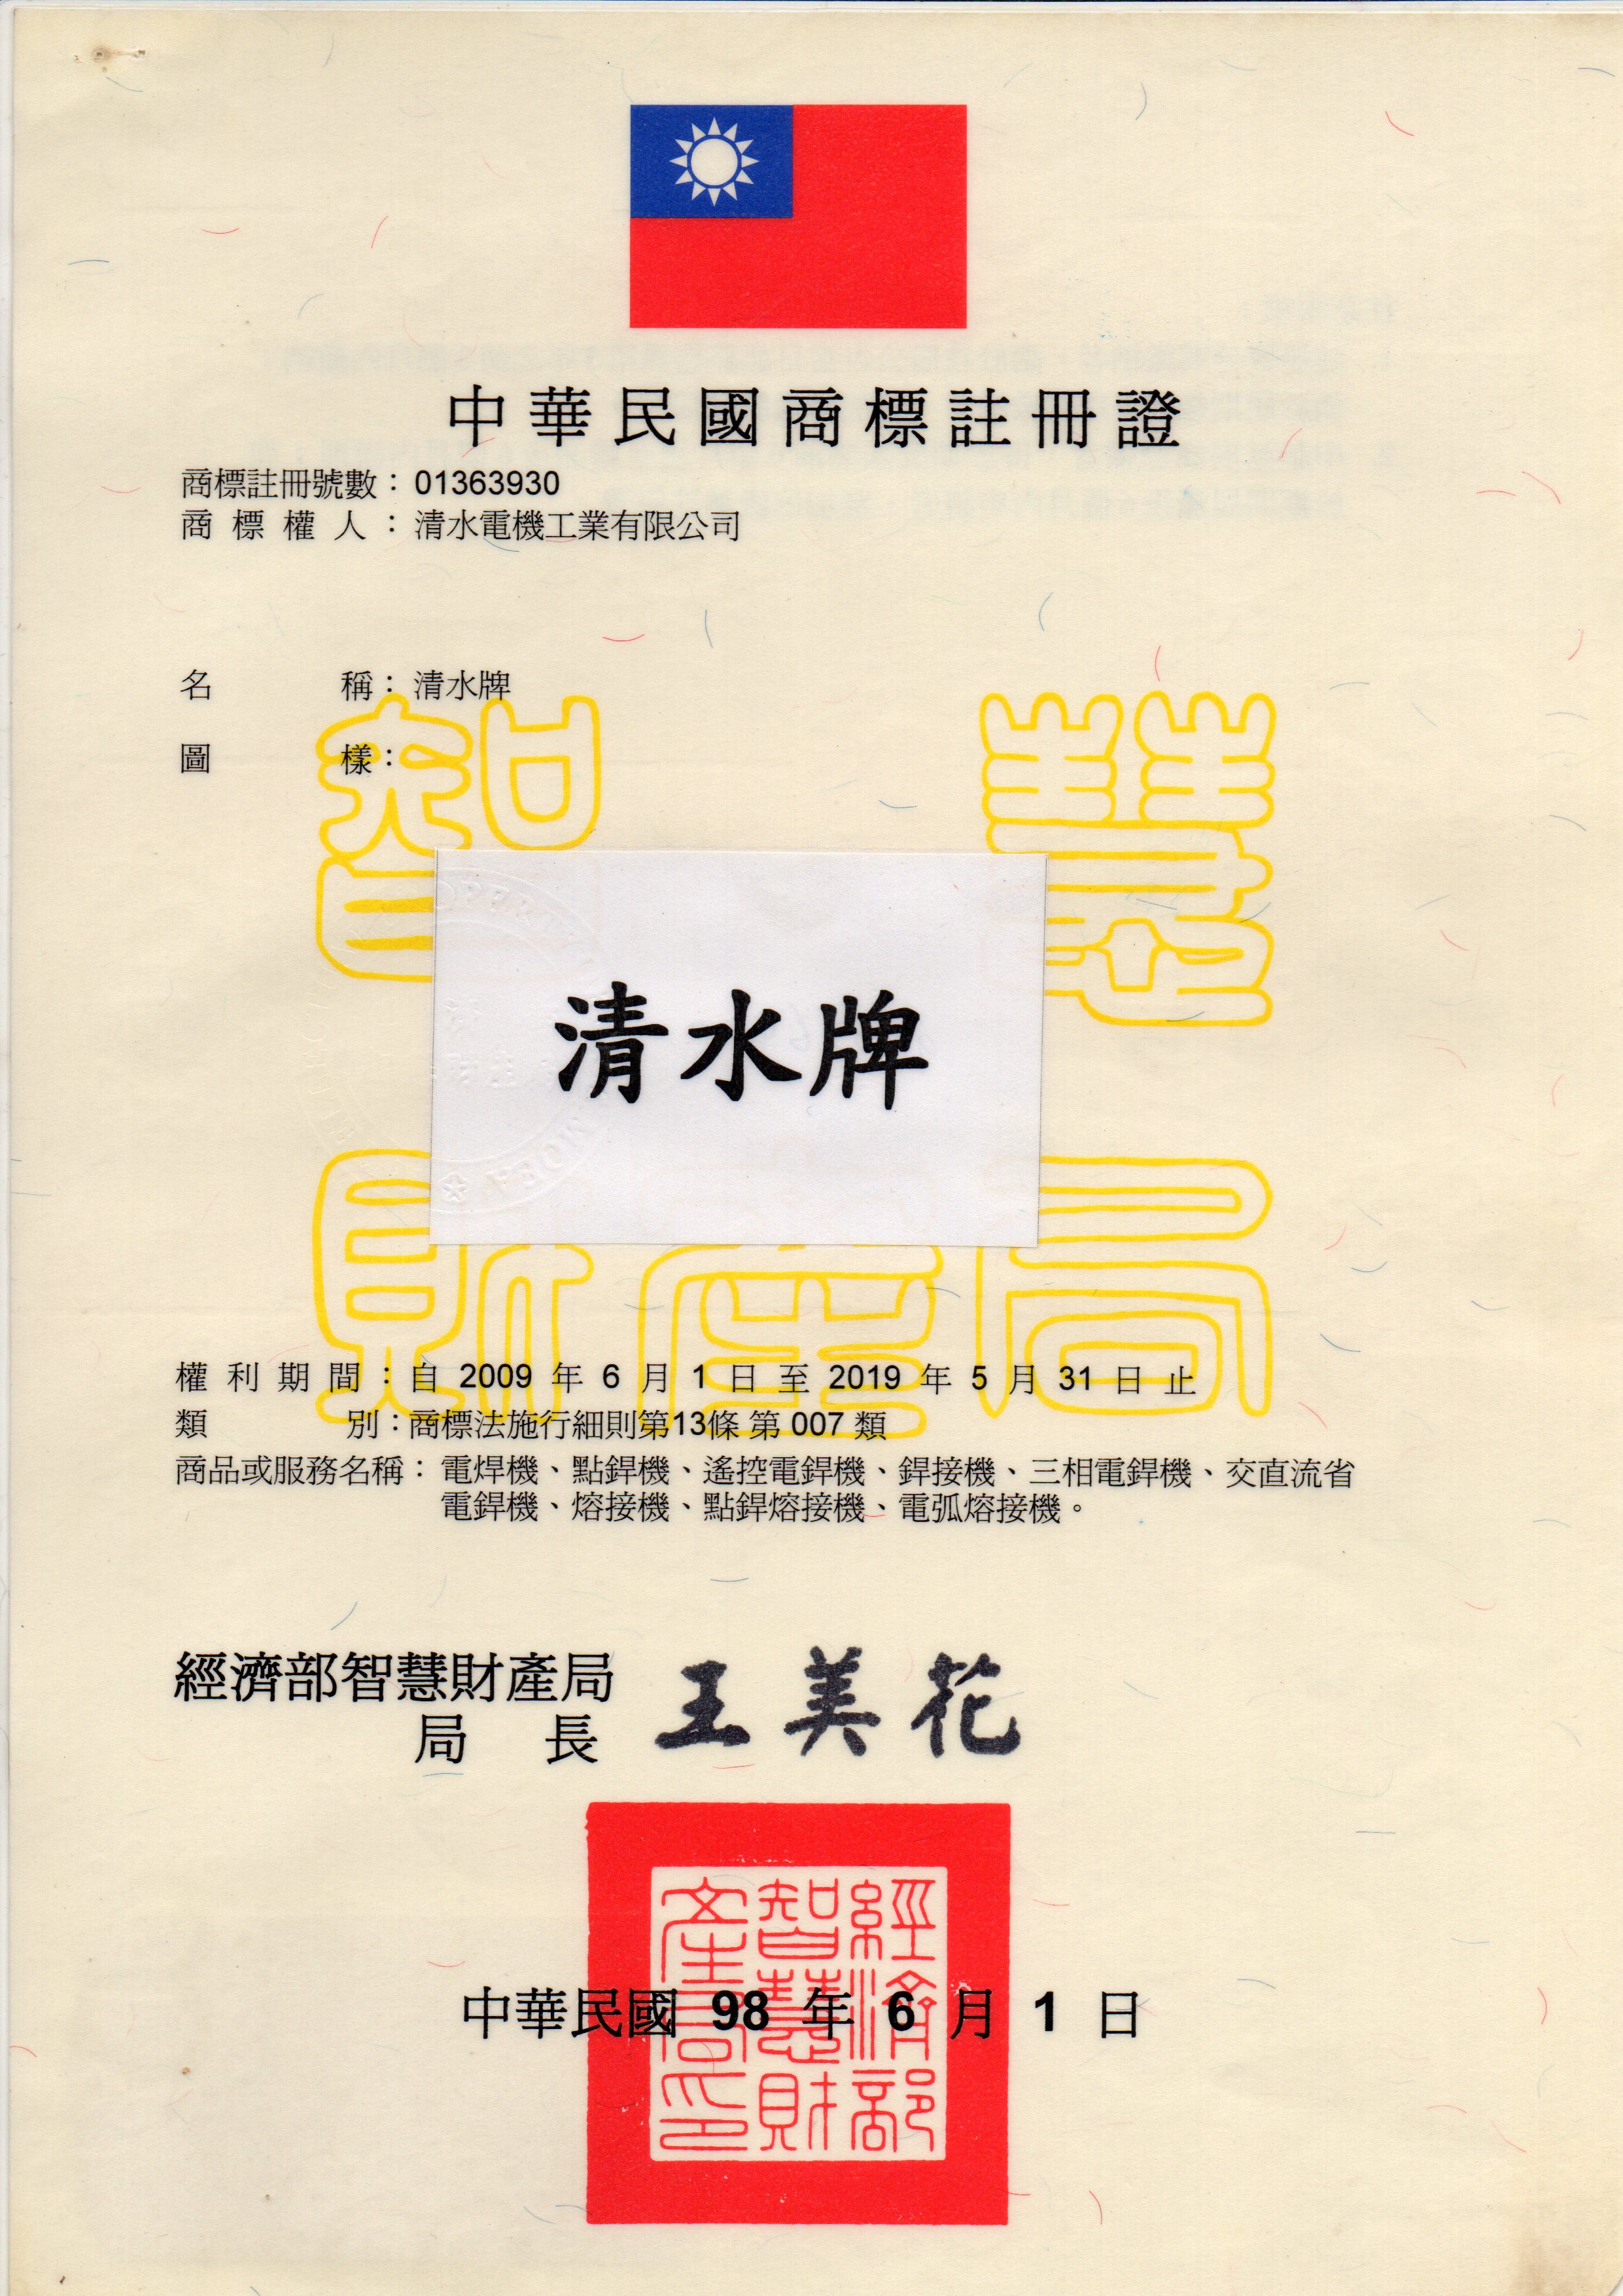 TAIWAN POWER 清水牌商標註冊證明書